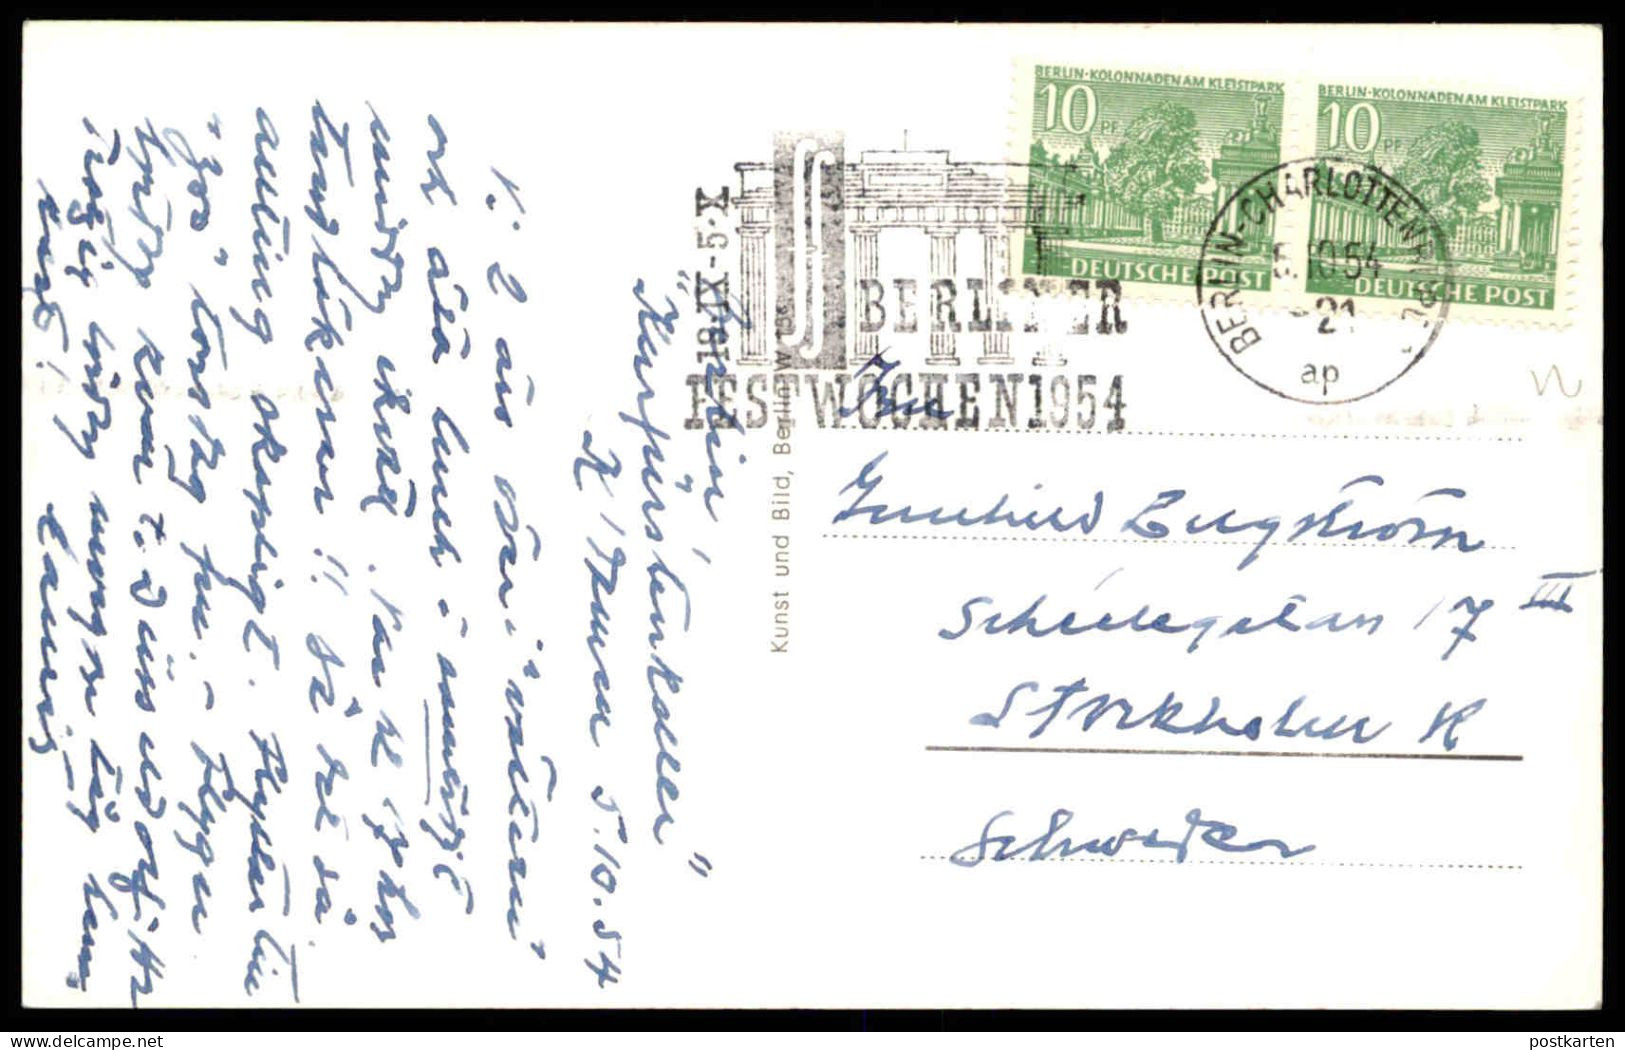 ALTE POSTKARTE BERLIN LUFTBRÜCKEN DENKMAL FLUGHAFEN TEMPELHOF FLUGZEUG FLIEGER Flugplatz Airport Ansichtskarte Postcard - Tempelhof